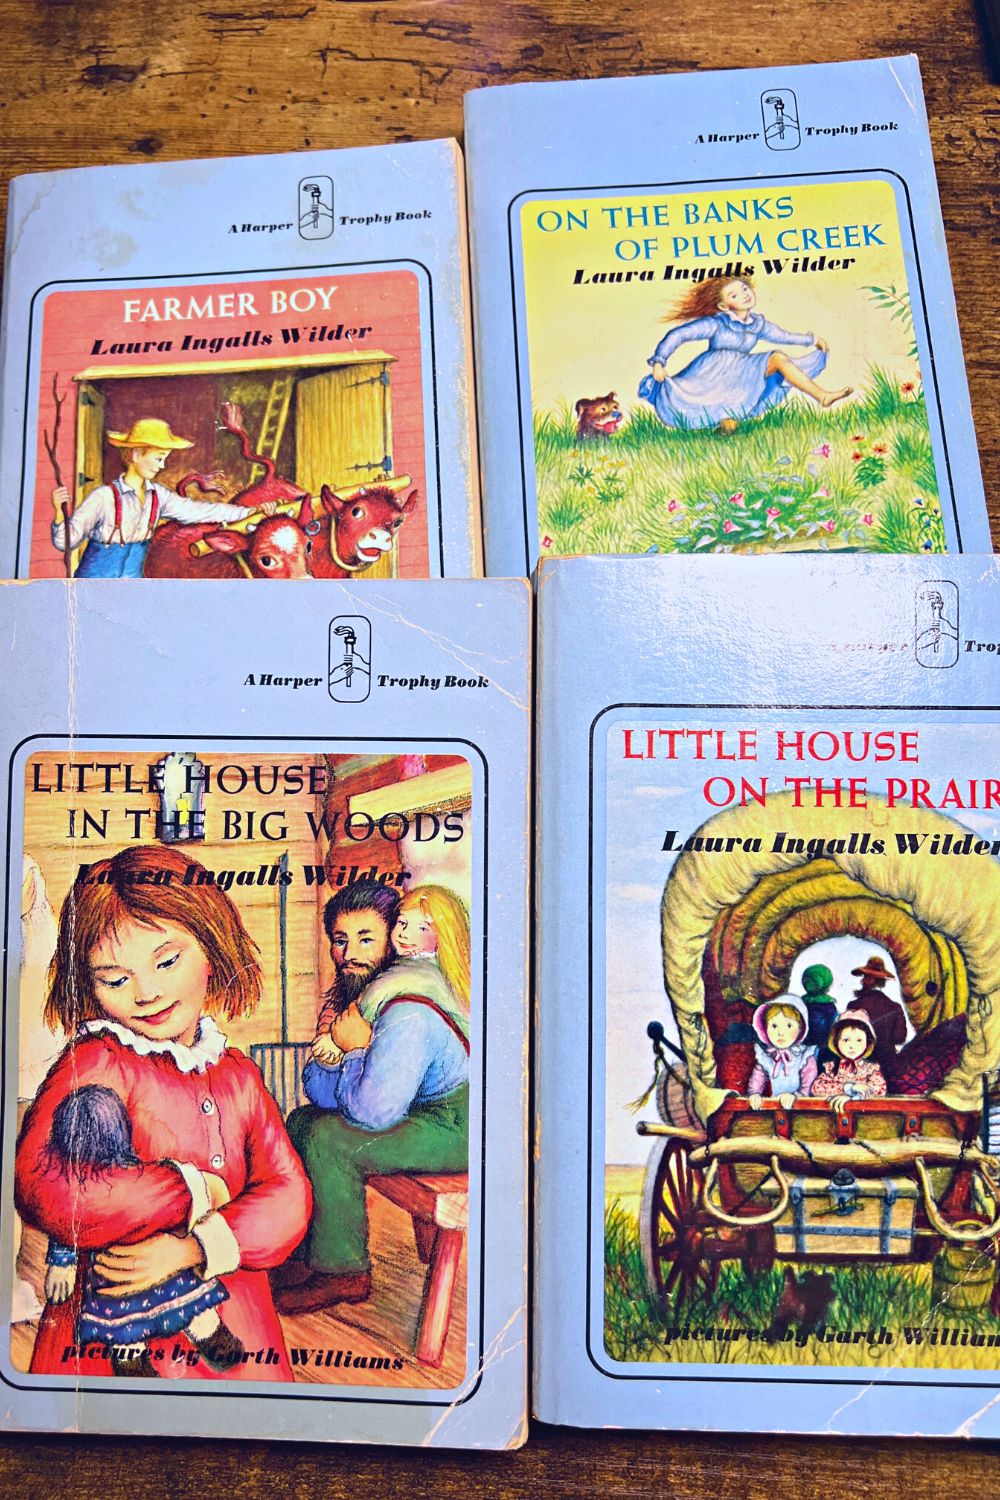 Read Little House On the Prairie Christmas Books Little House books on a table